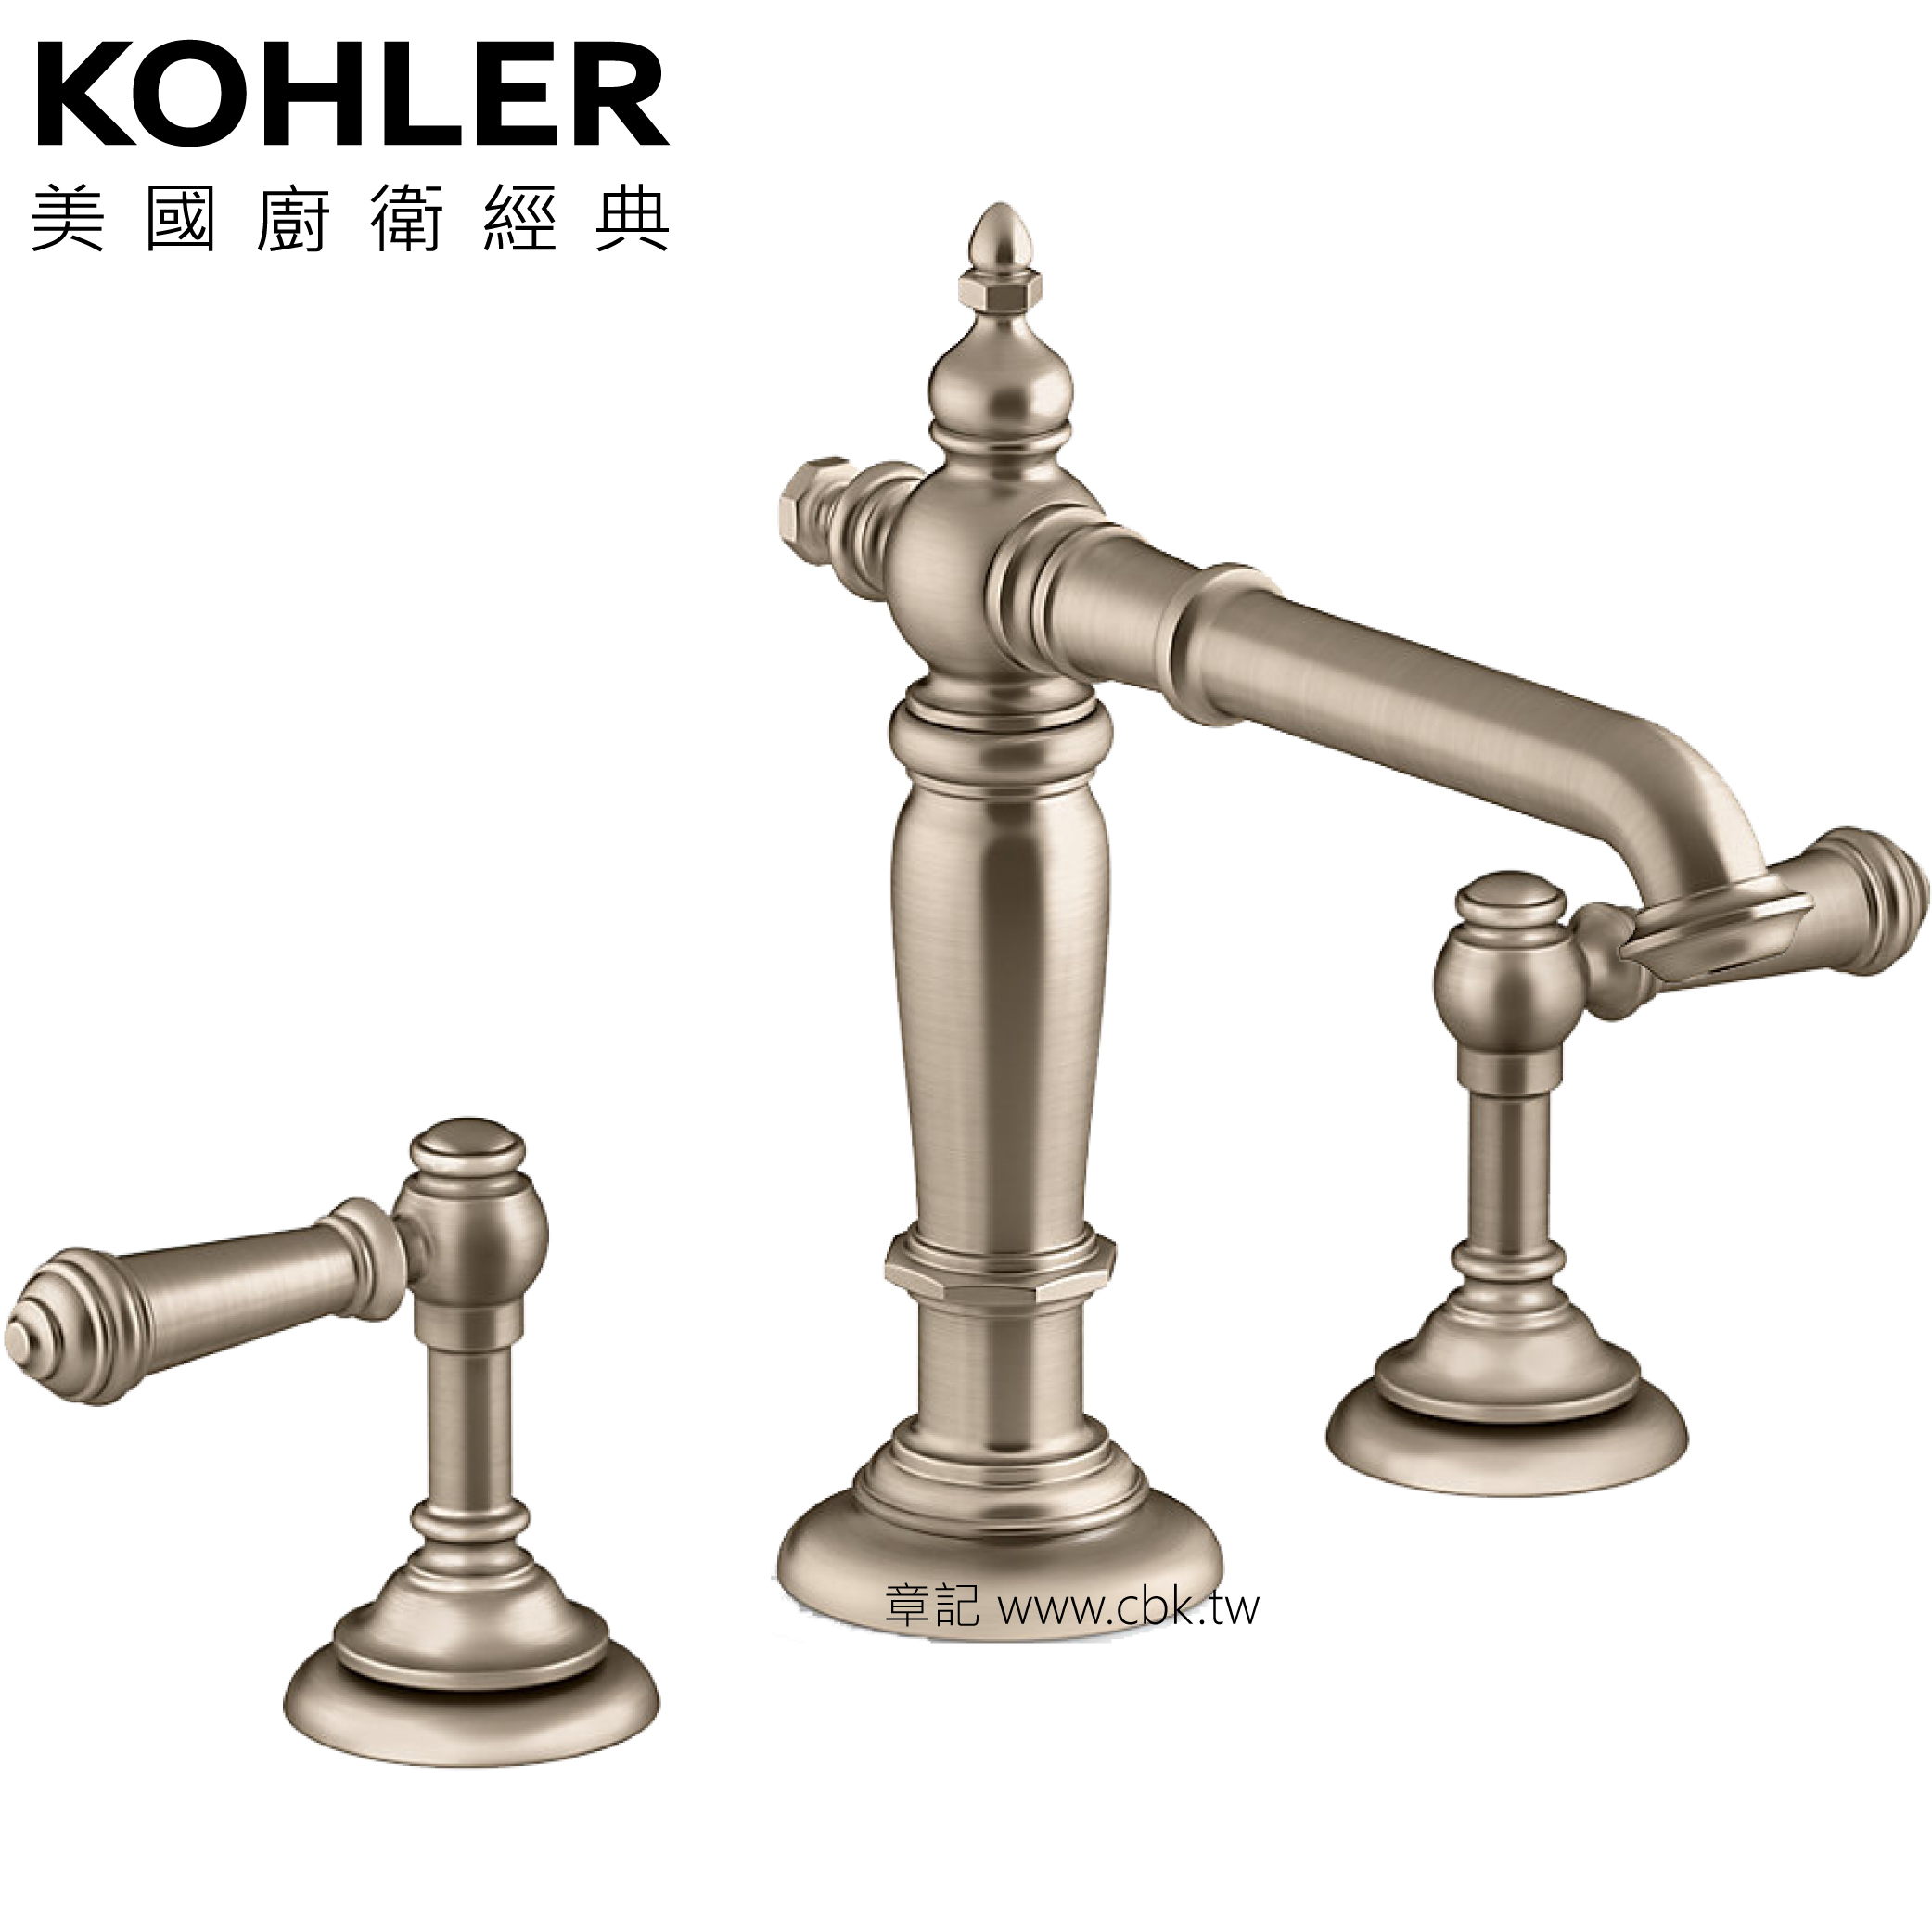 KOHLER Artifacts 三件式臉盆龍頭 K-72760T-BV_K-98068T-4-BV  |面盆 . 浴櫃|面盆龍頭